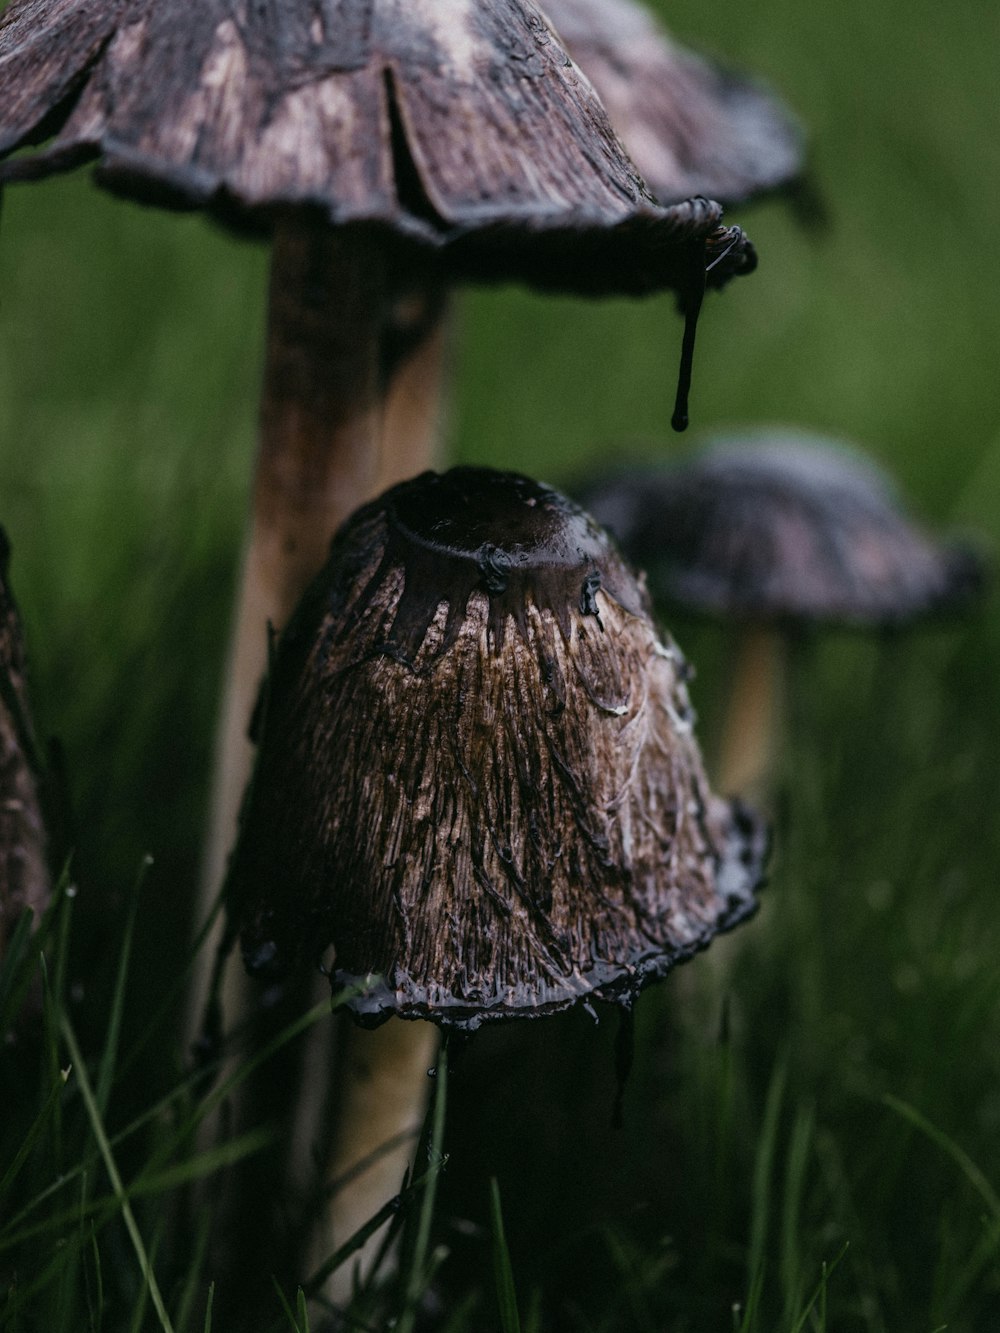 black and white mushroom